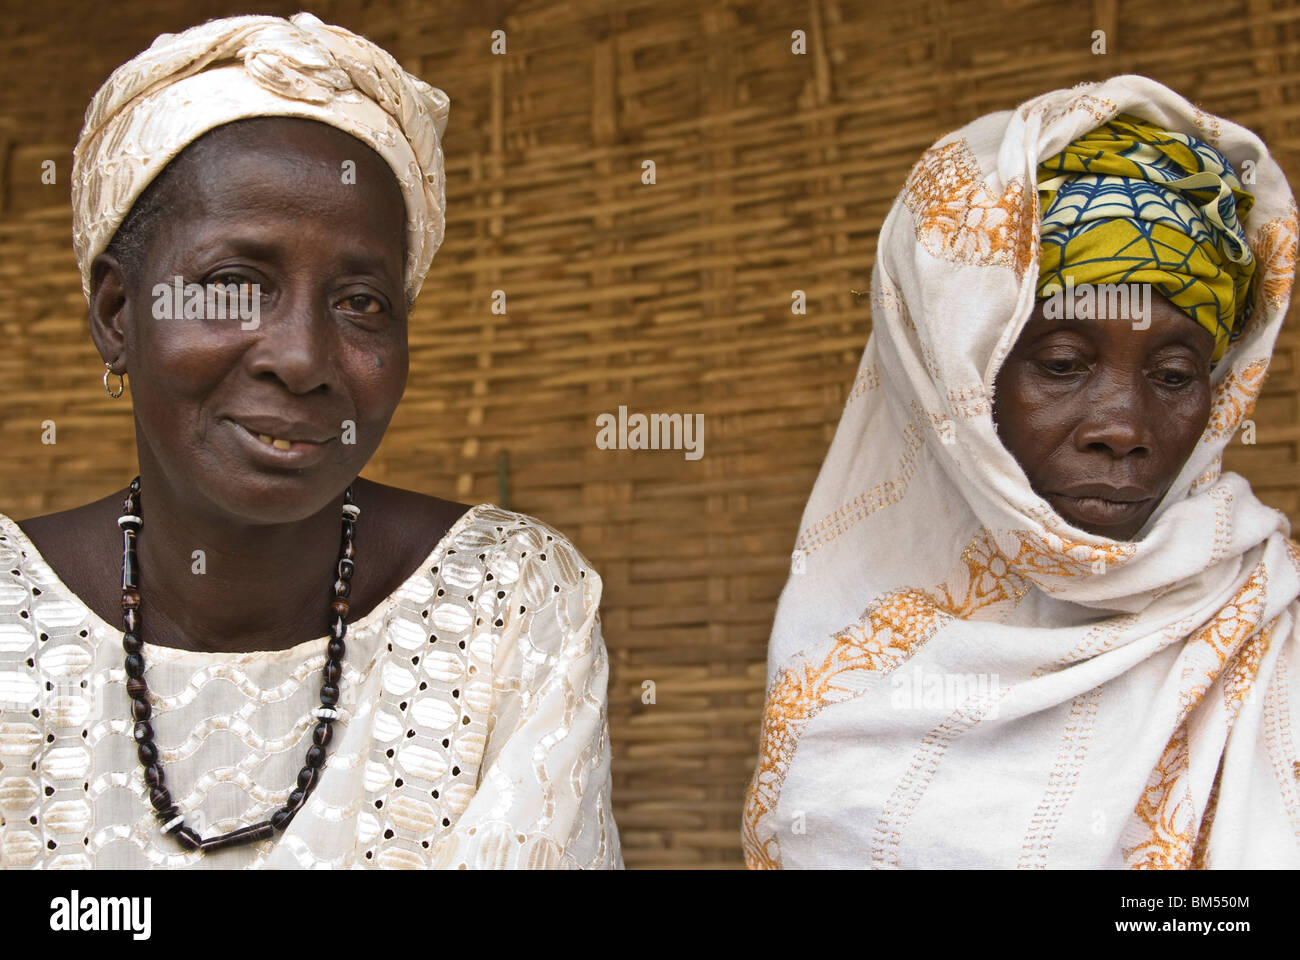 African Bassari women with headscarfs, Salemata village, Bassari country, Senegal, Africa. Stock Photo